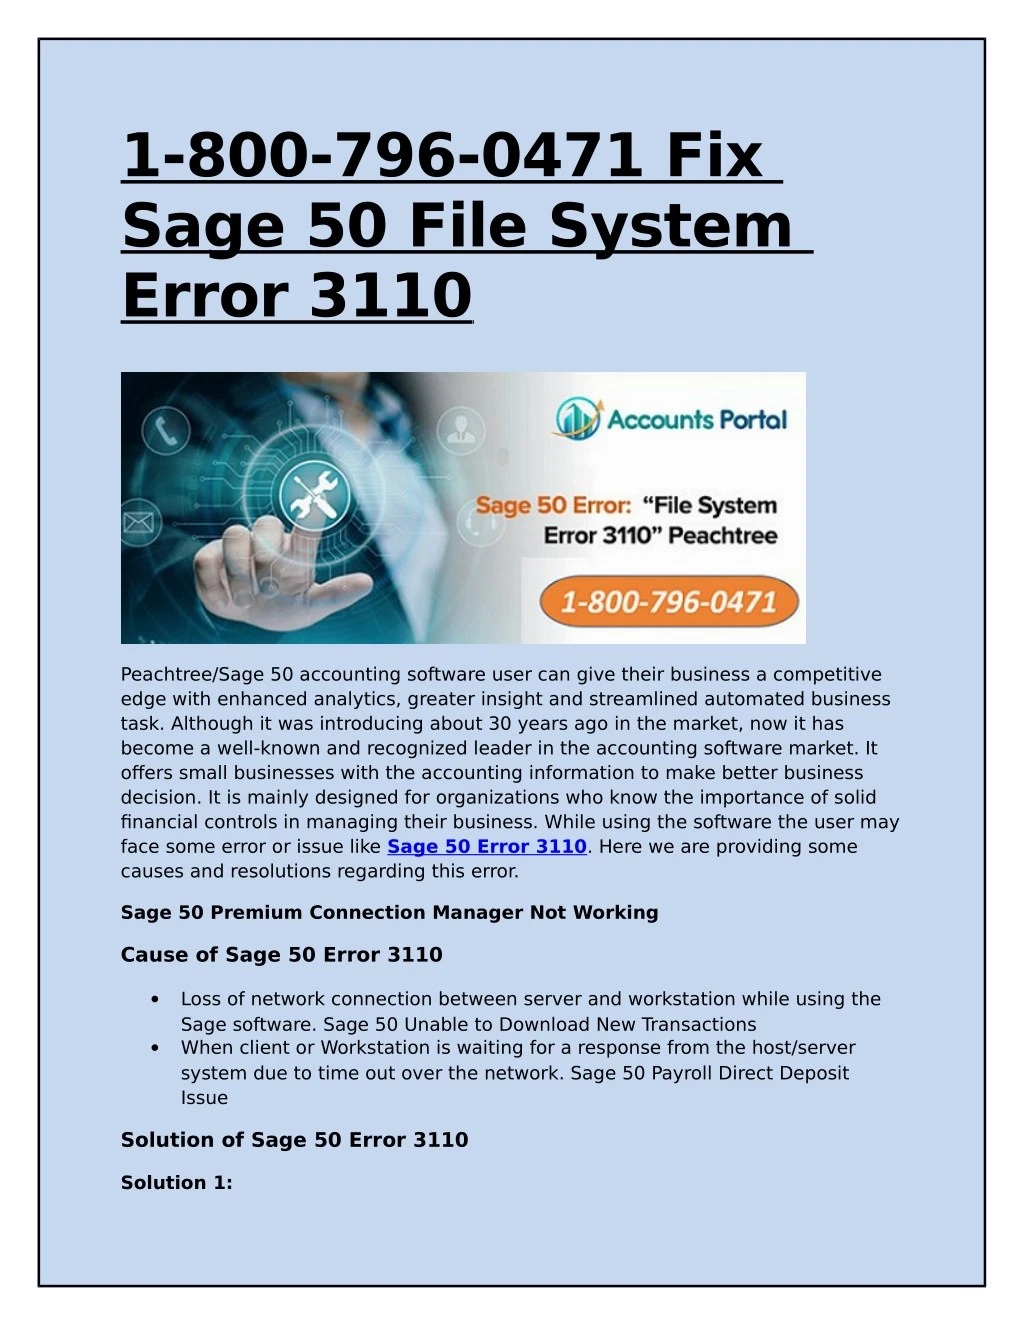 1 800 796 0471 fix sage 50 file system error 3110